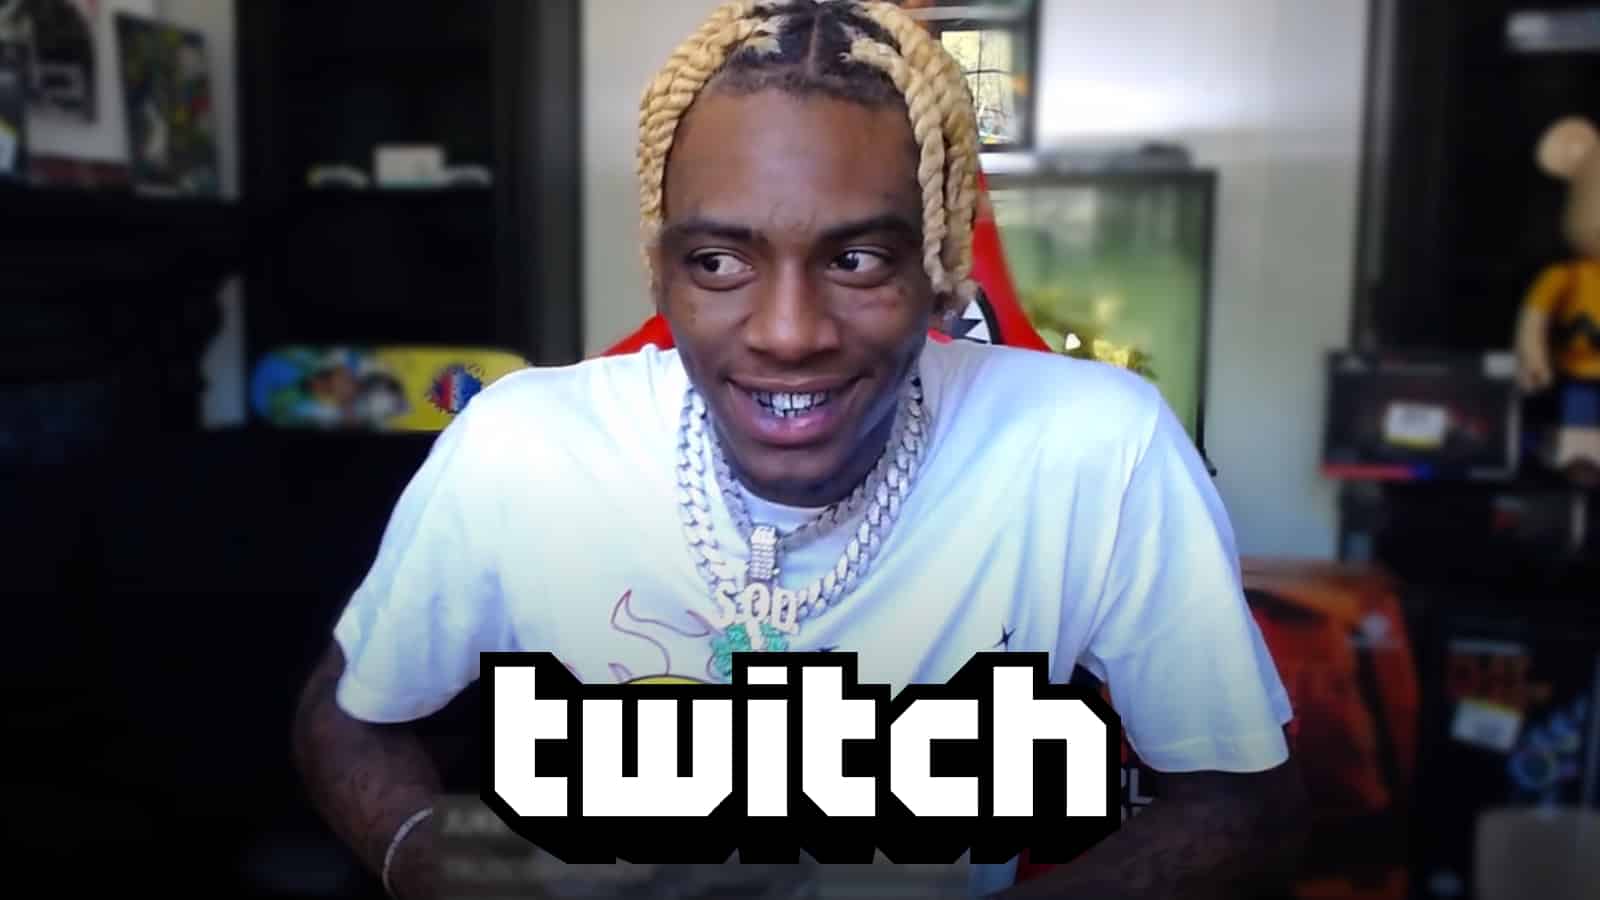 Soulja Boy smiling on his Twitch stream above platform logo.